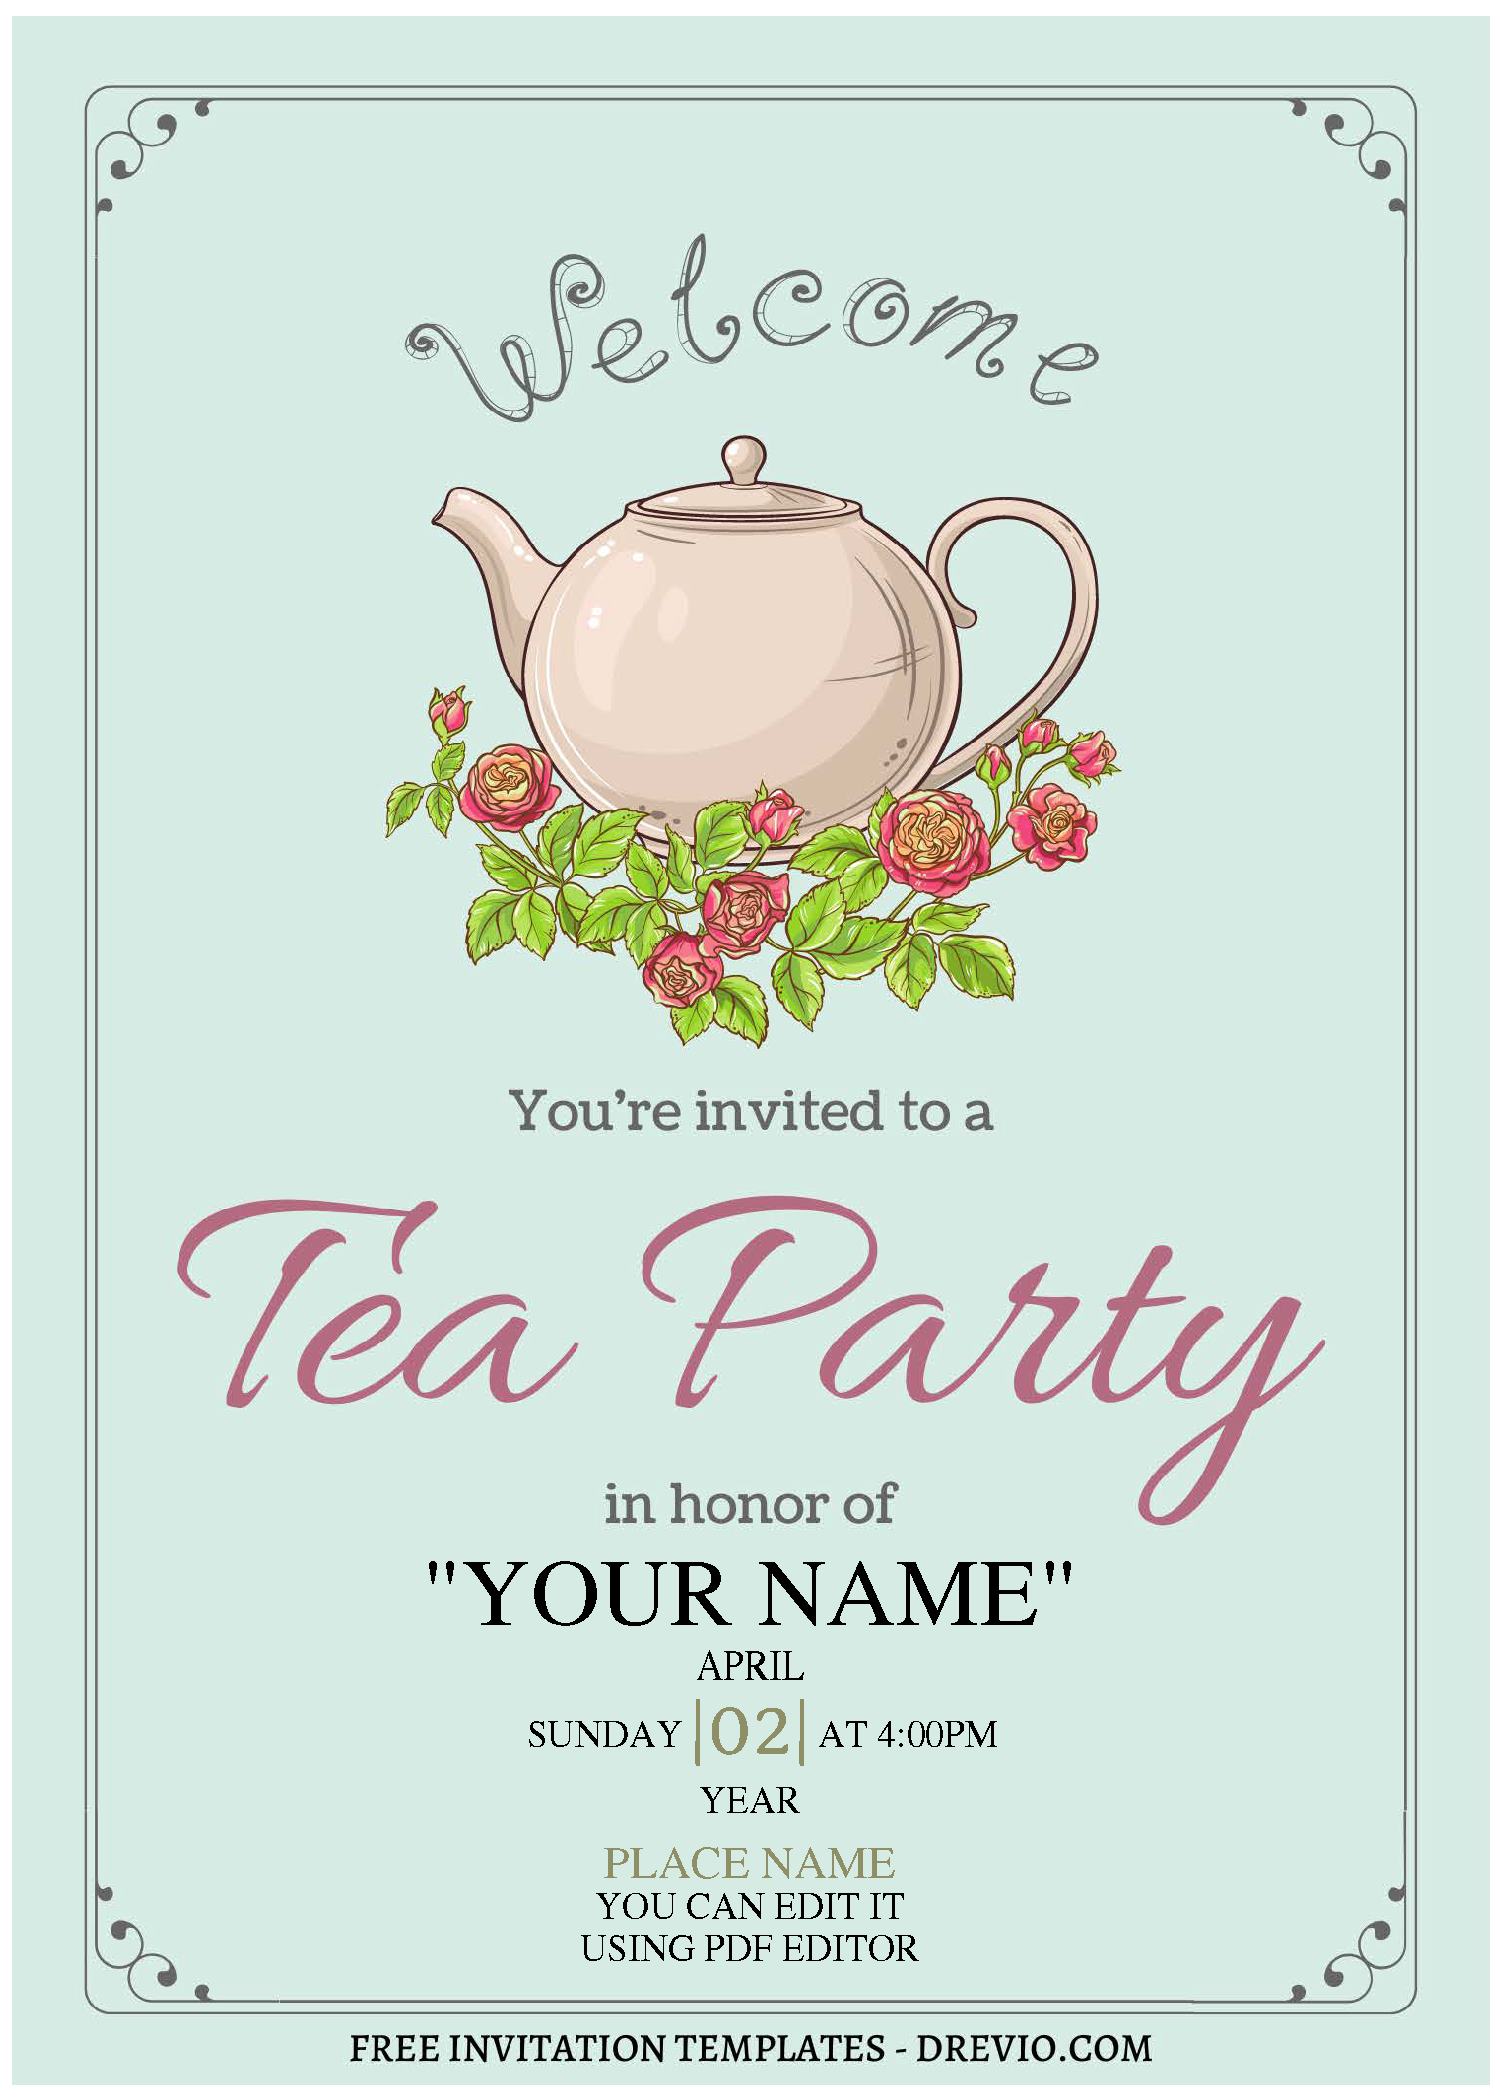 (Free Editable PDF) Adorable Tea Party Birthday Invitation Templates A